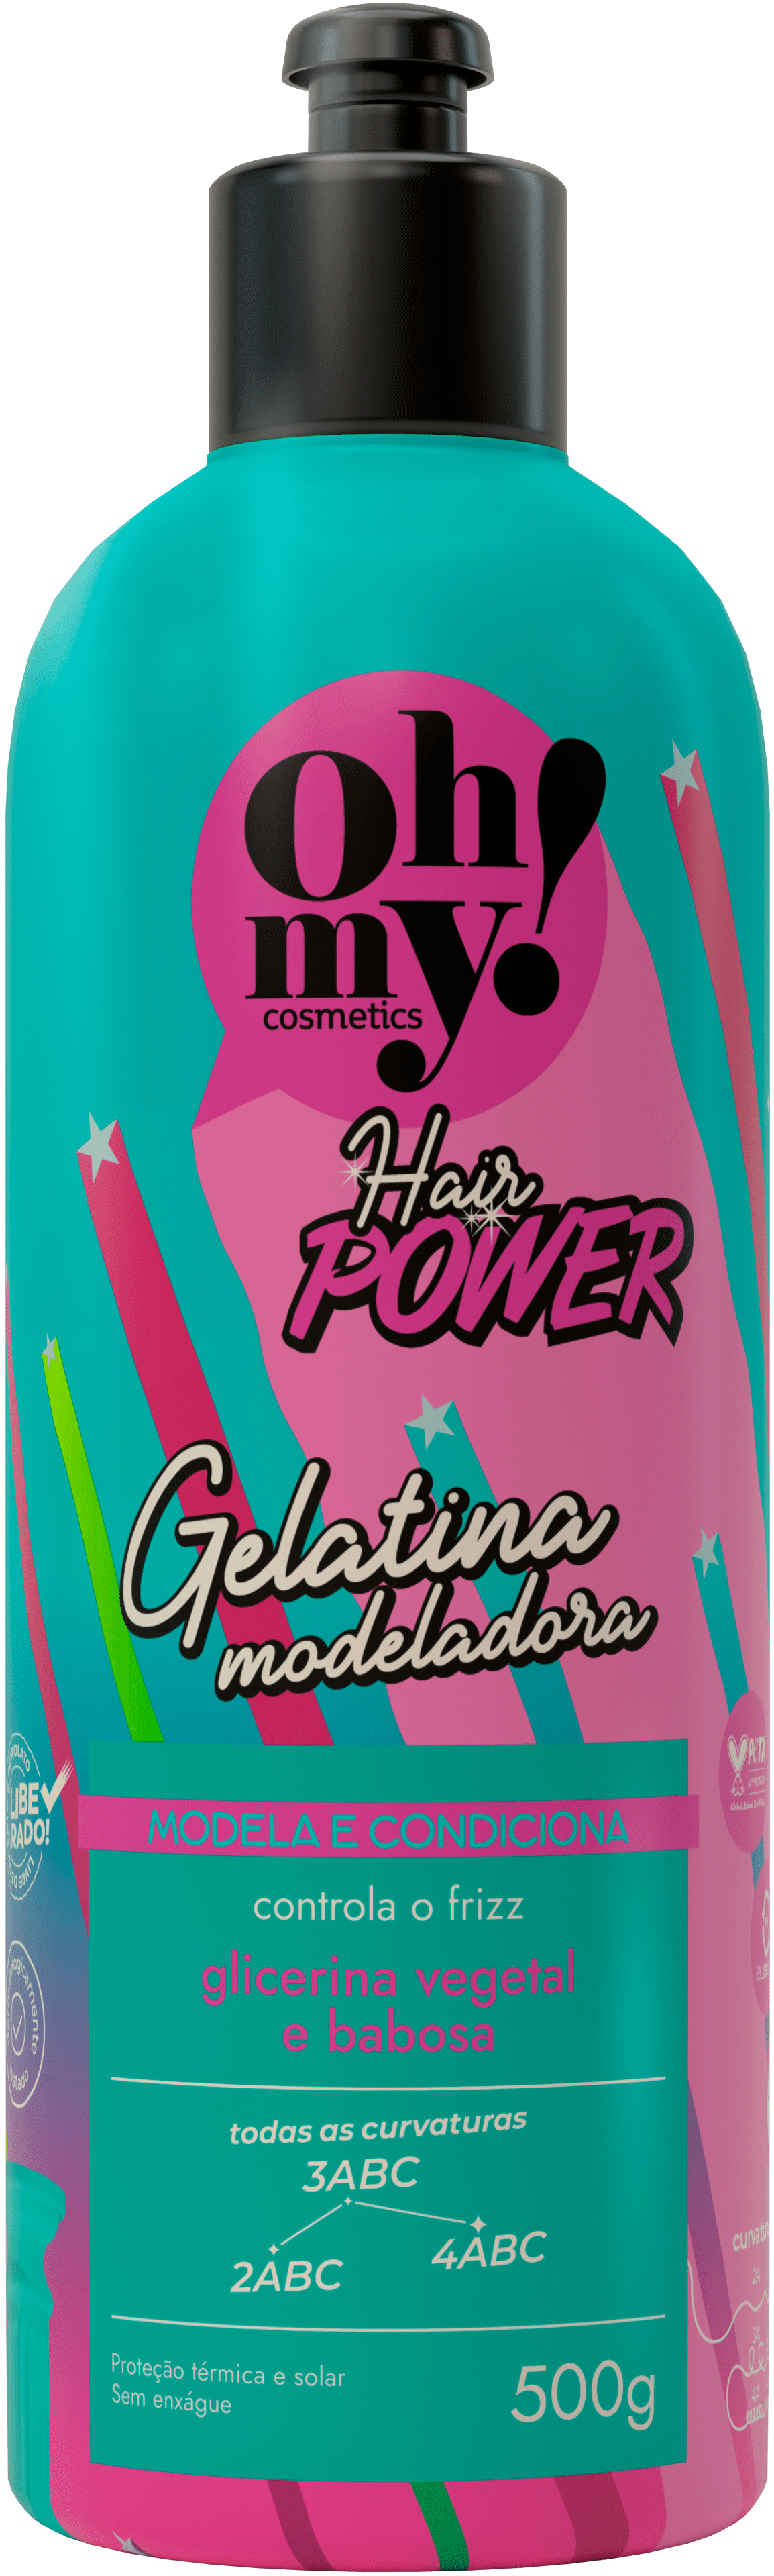 GELATINA MODELADORA OH MY HAIR POWER 500g 